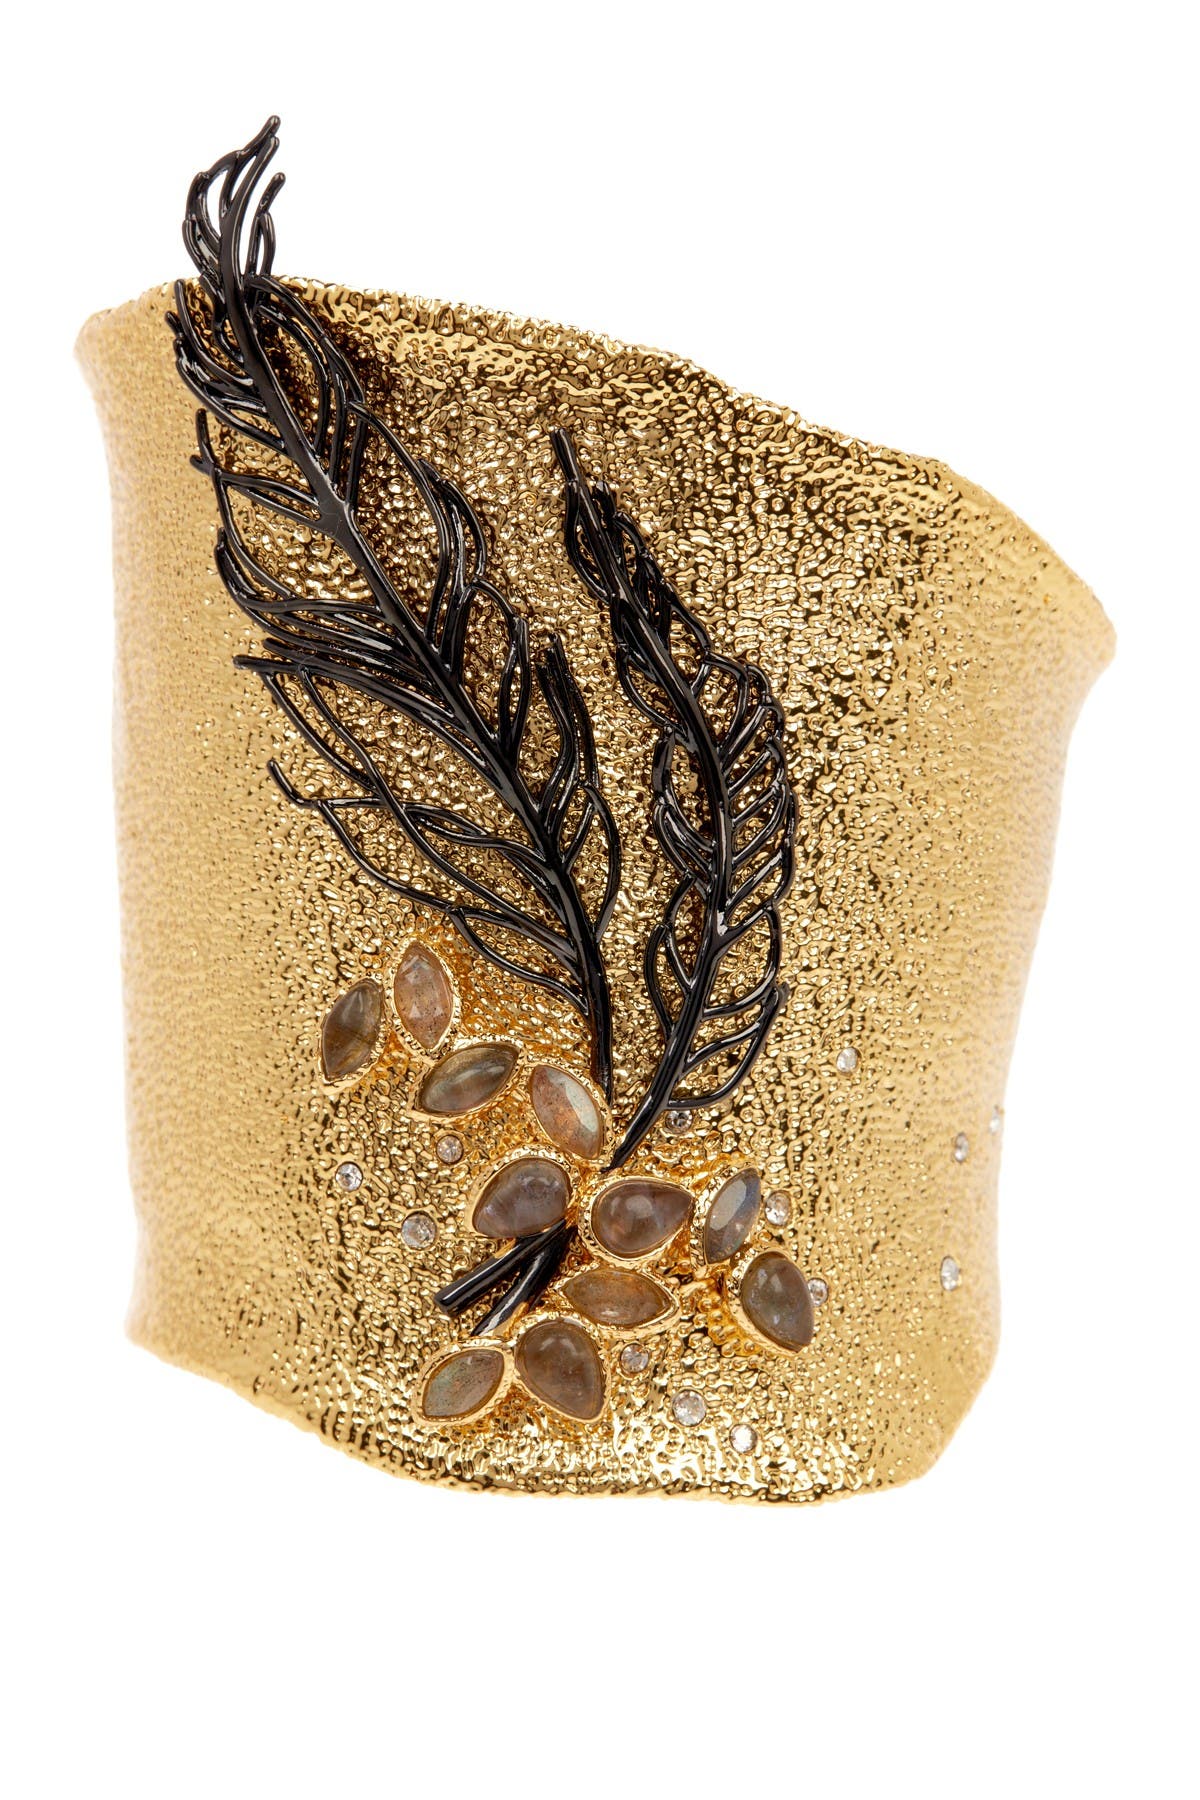 Alexis Bittar Elements Labradorite Feather Cuff Bracelet